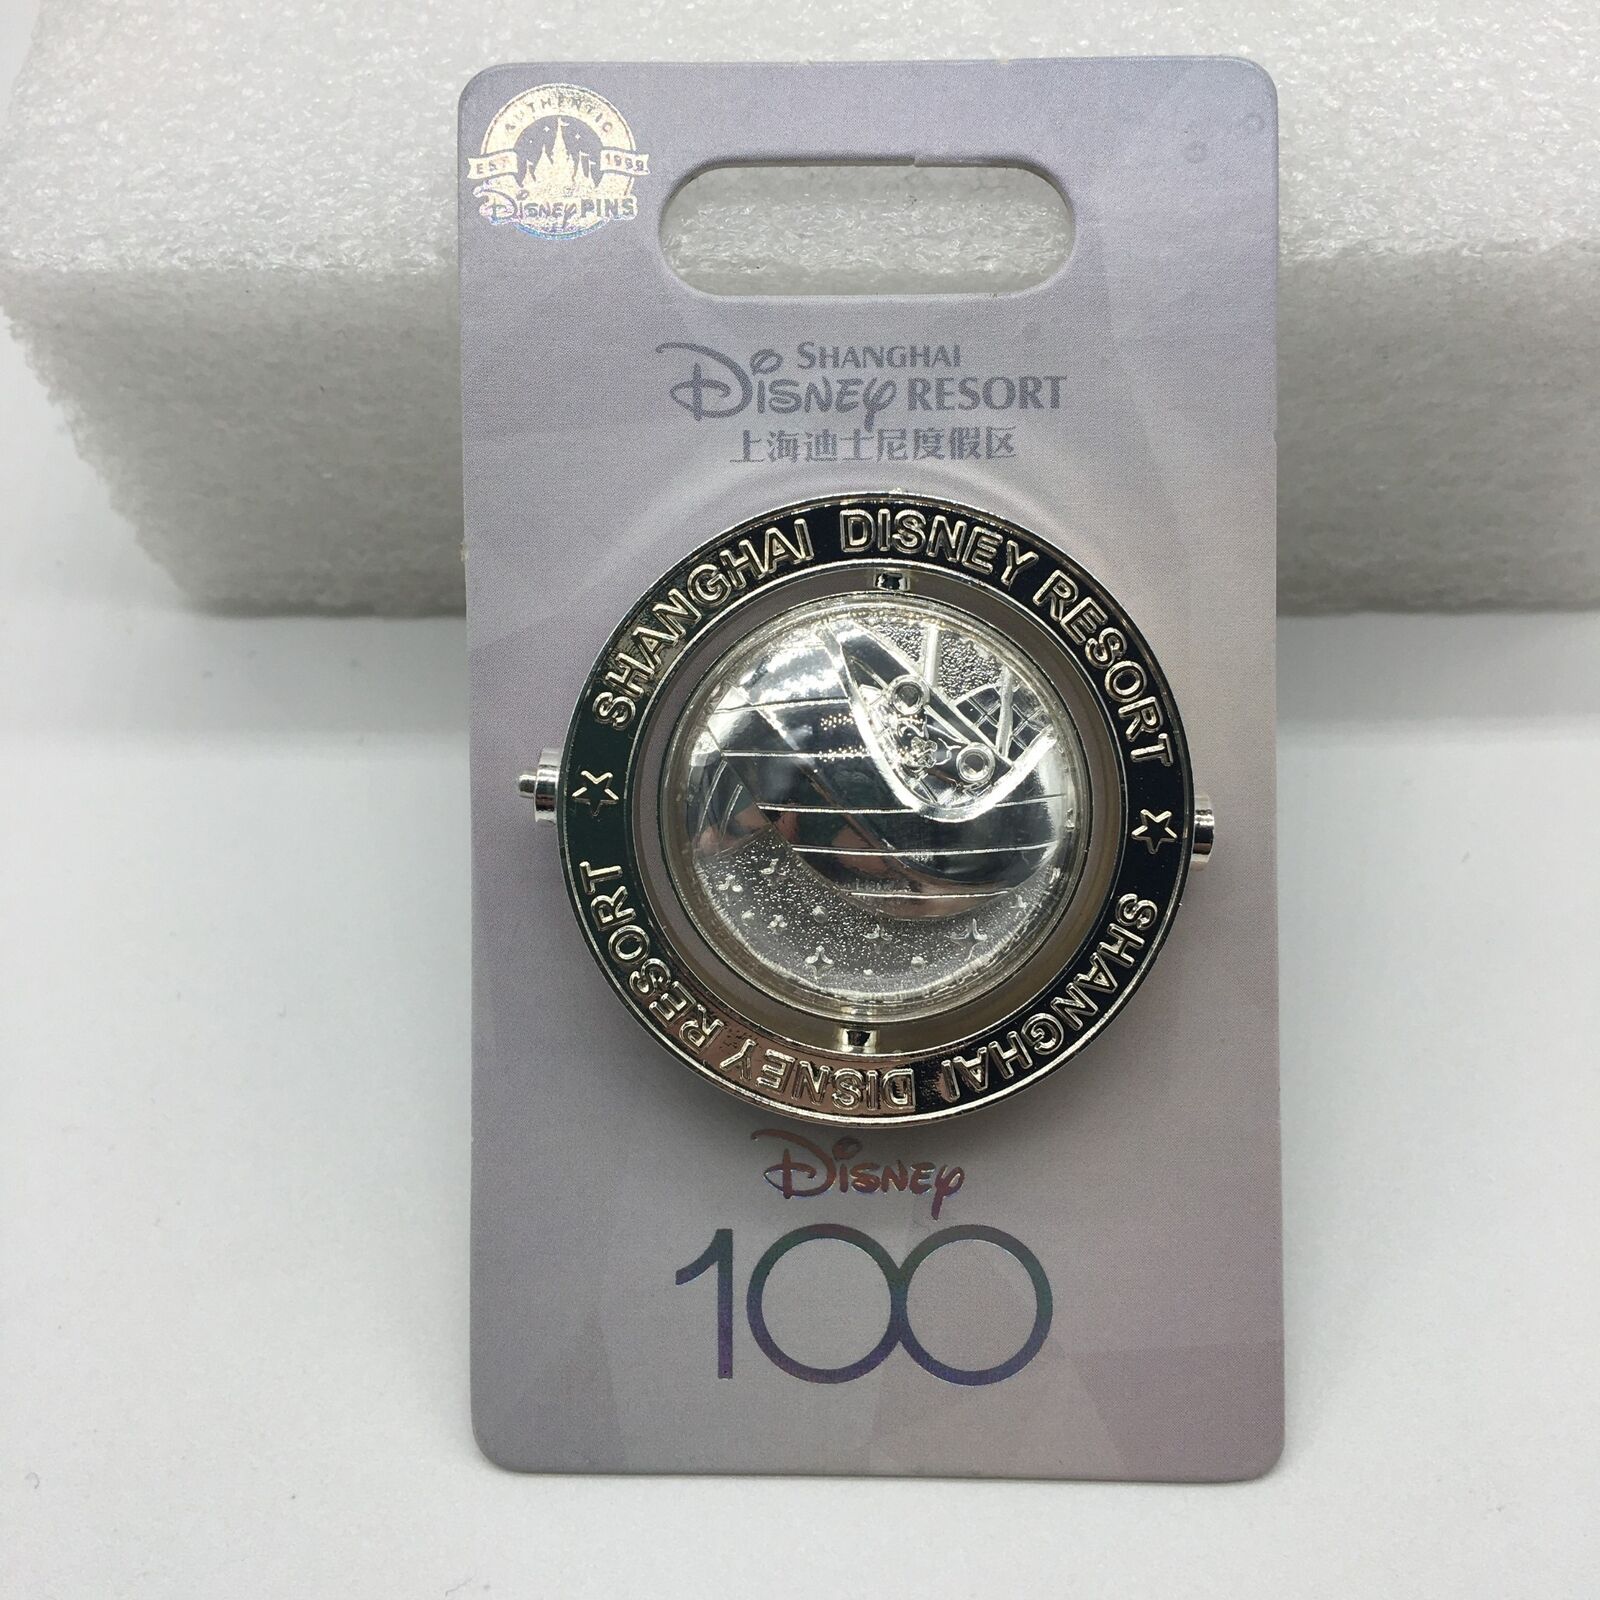 Disney Pin Shanghai SHDL 2023 SDR Disney 100 Tron Tommorow land new on Card